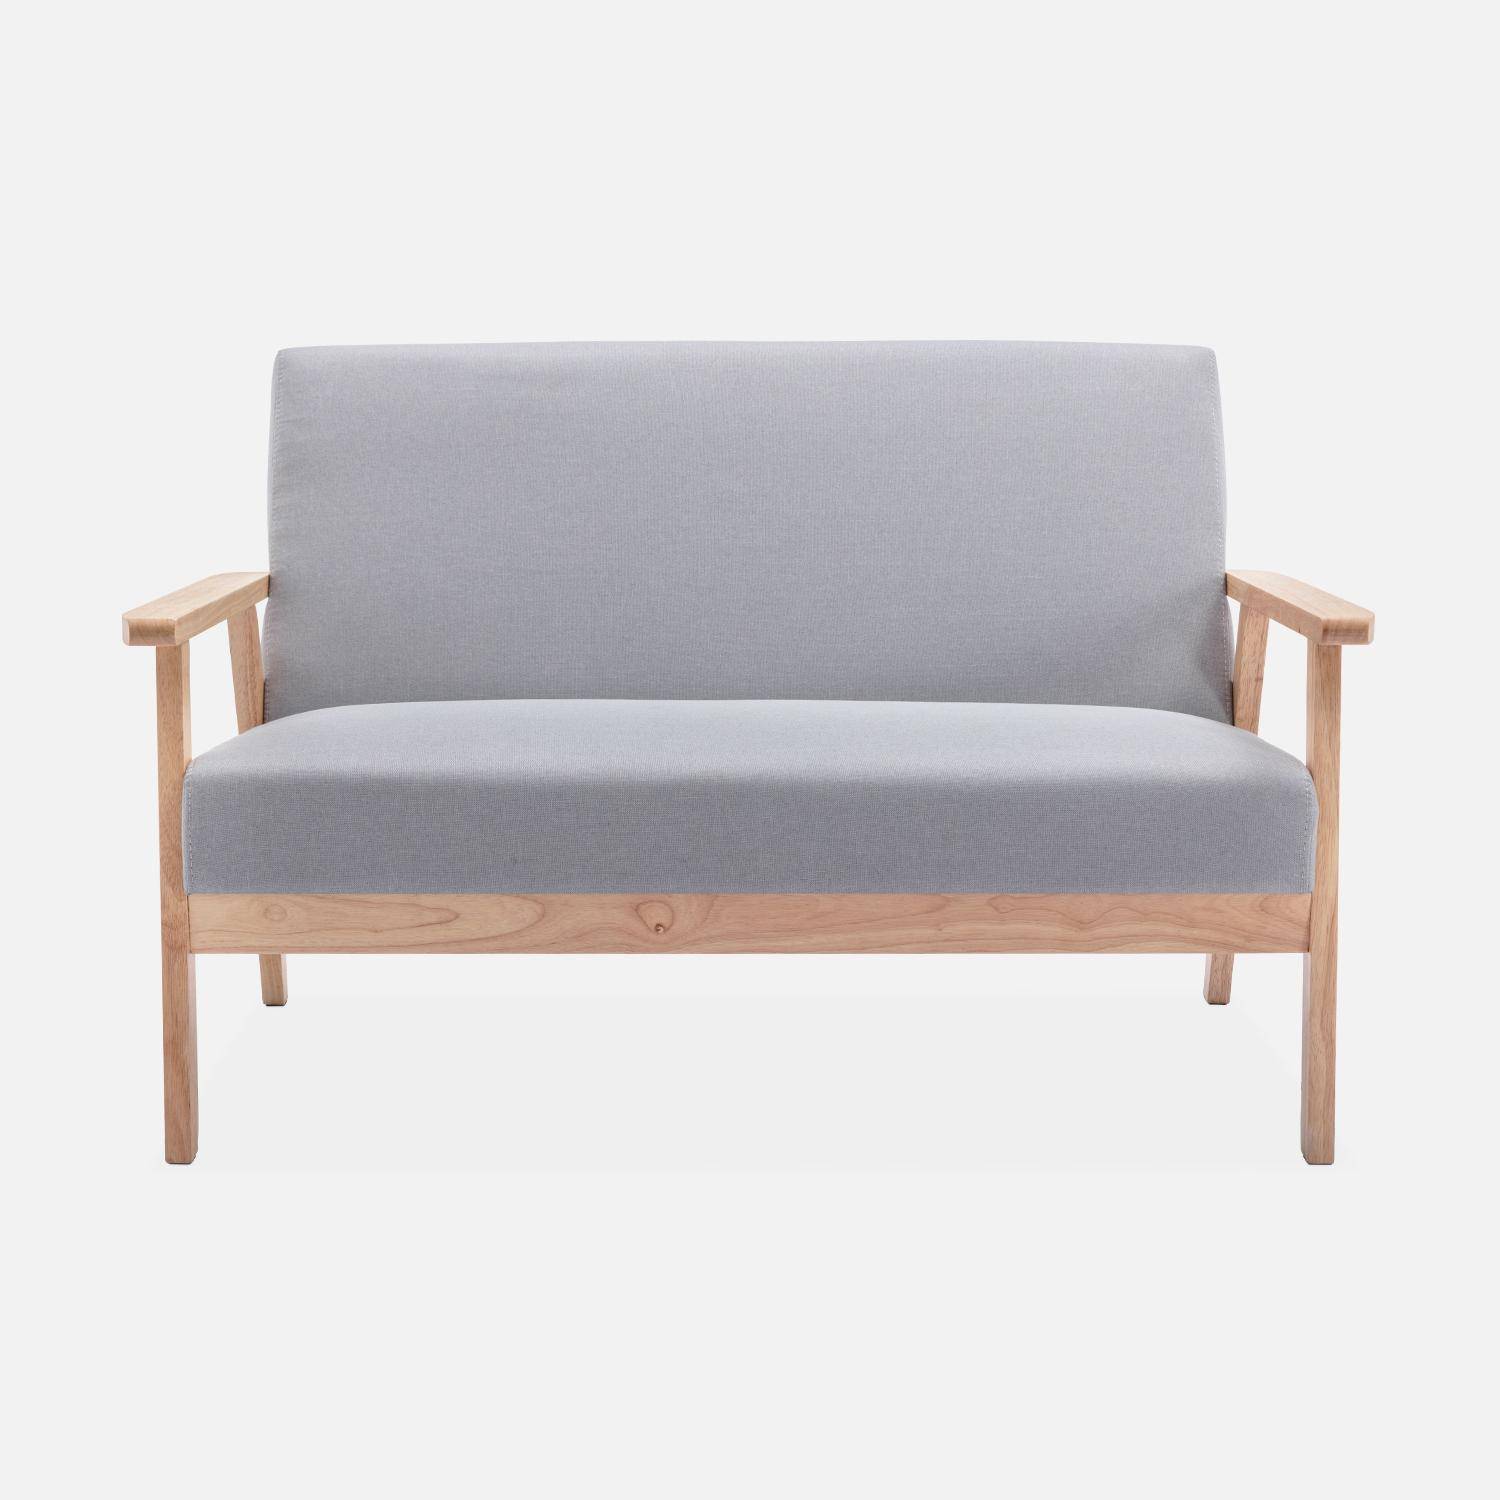 Banco y sillón de madera y tela gris claro, Isak, L 114 x A 69,5 x A 73 cm,sweeek,Photo4